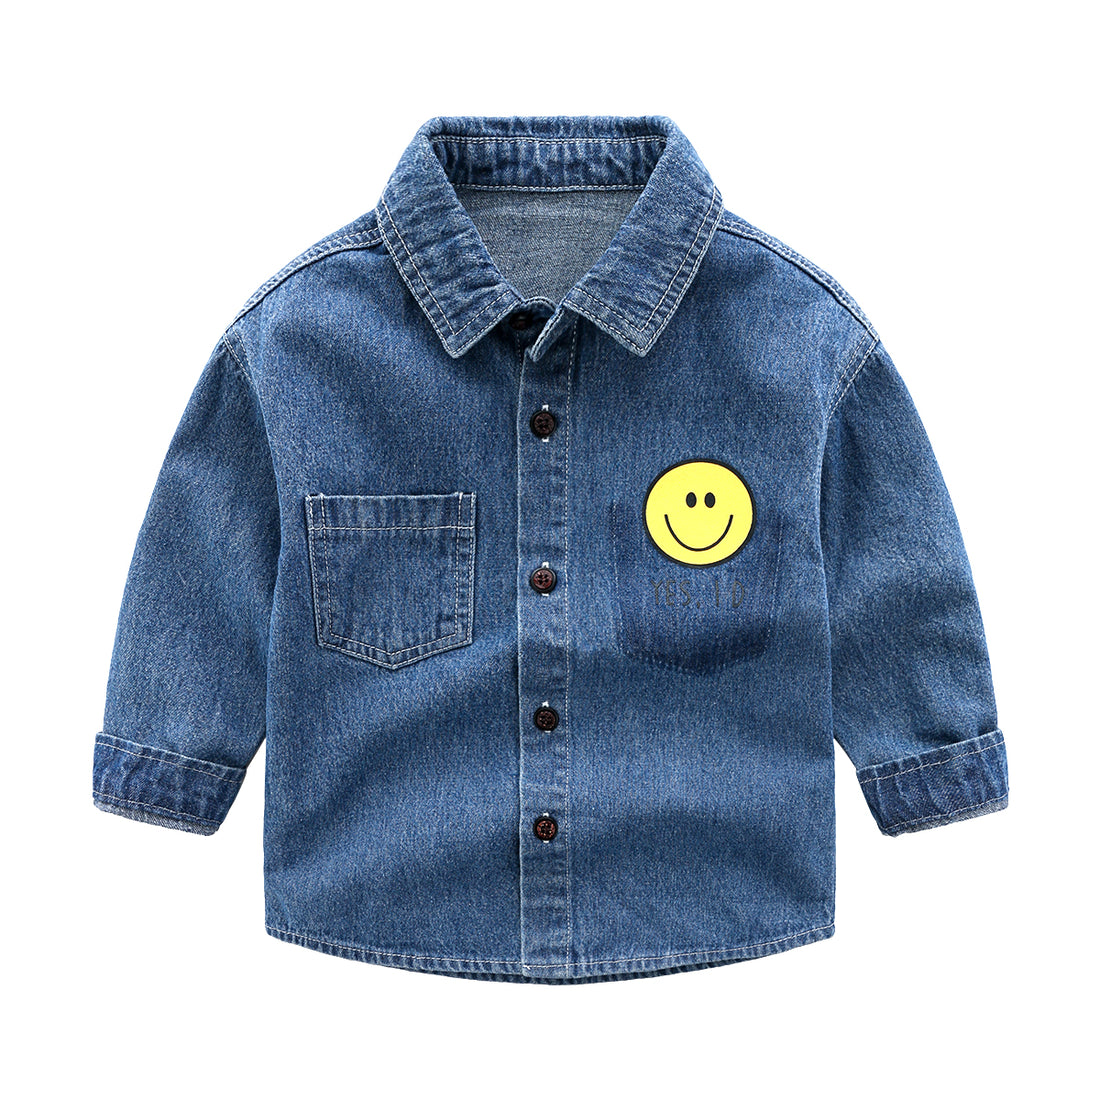 [513493] - Baju Atasan Import Kemeja Anak - Motif Smile Pouch